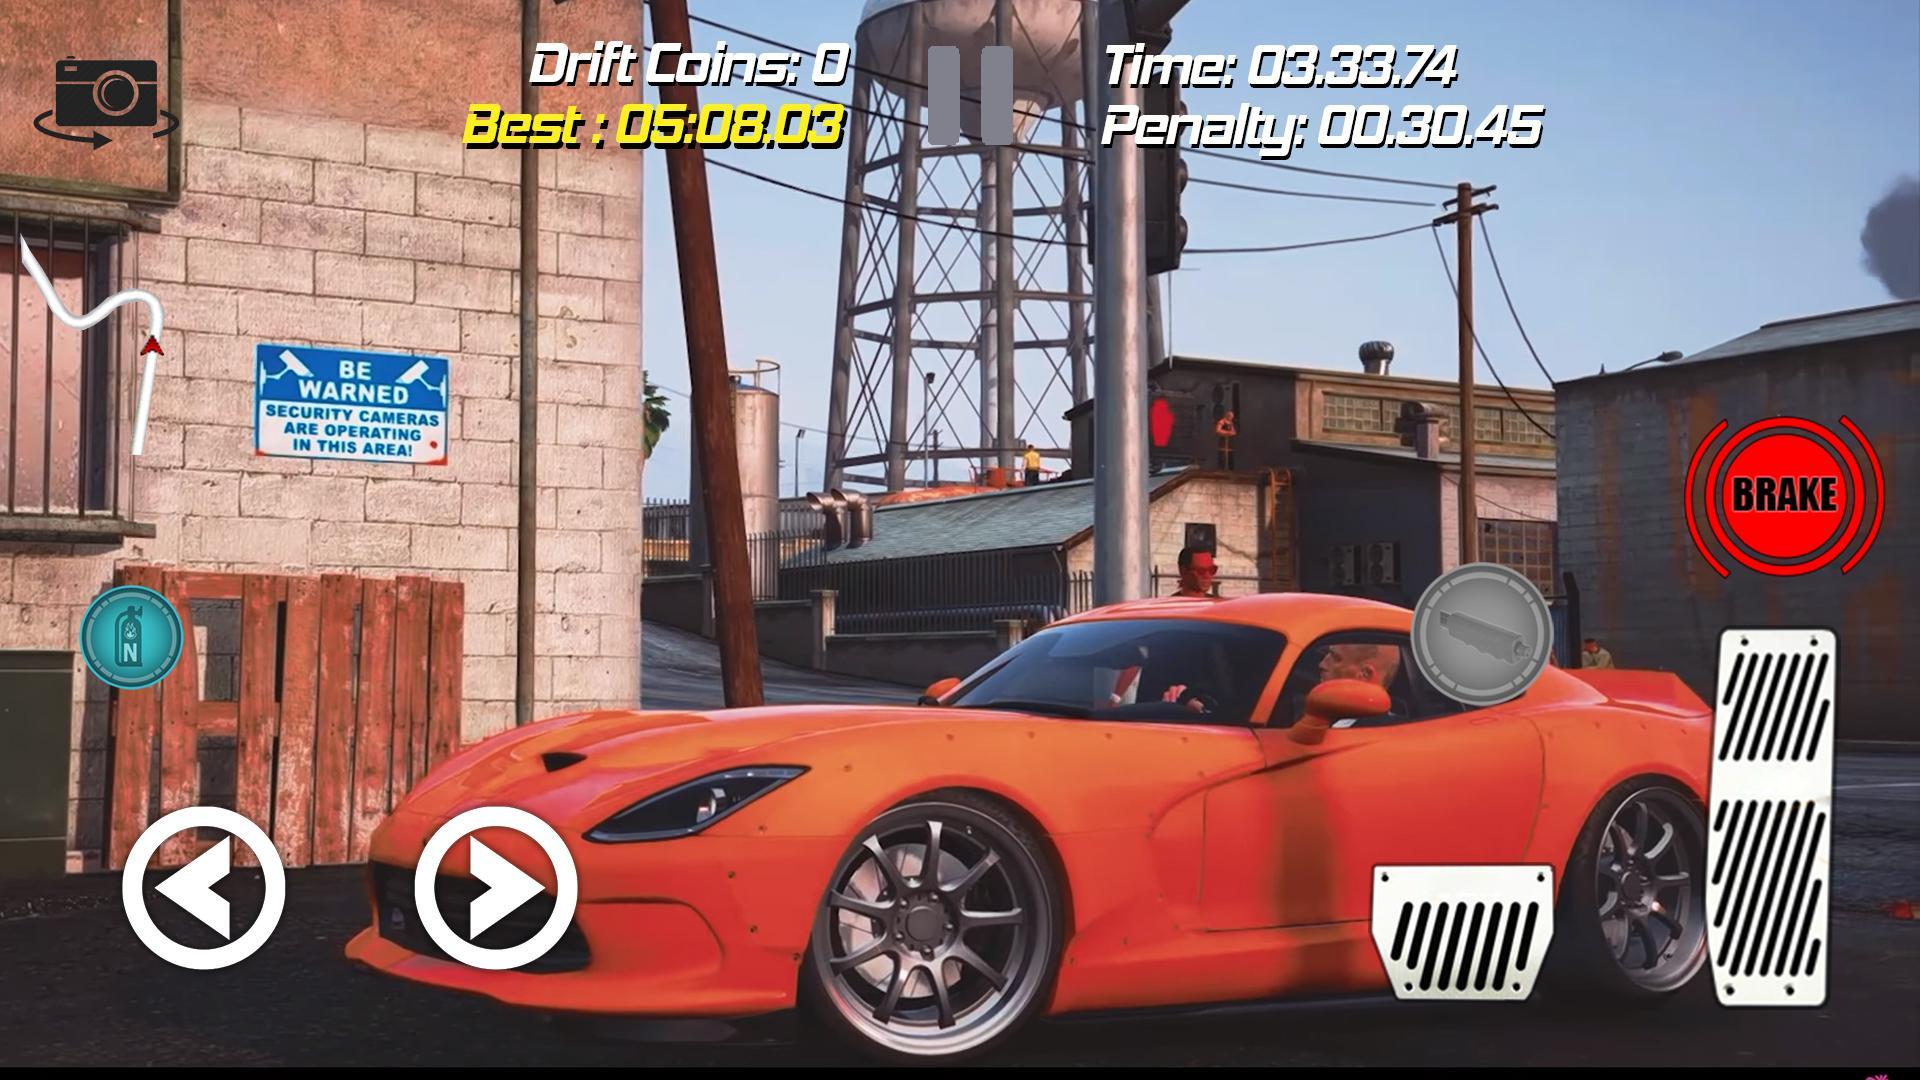 Drift Racing Srt Viper Simulator Game For Android Apk Download - roblox vehicle simulator viper